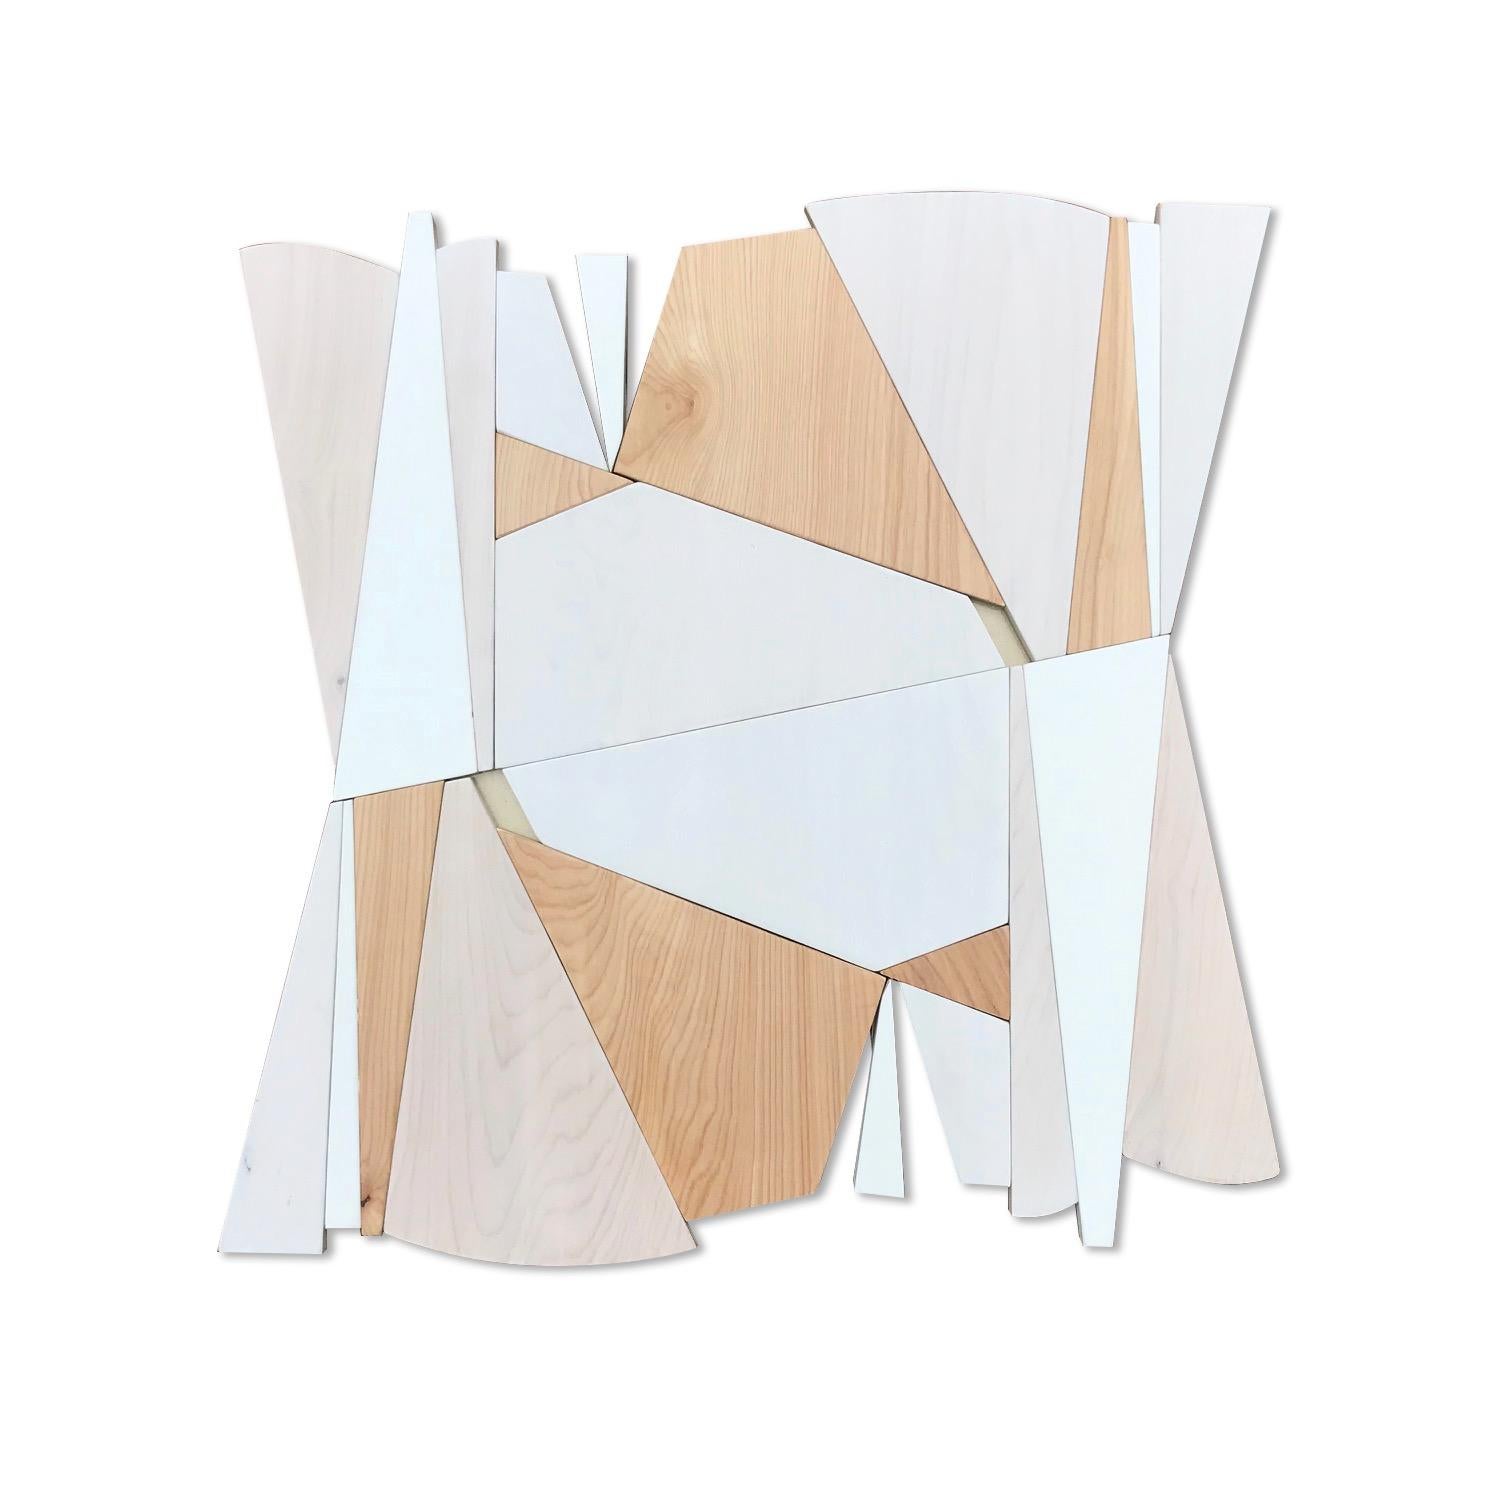  Banneret (wood wall art modern sculpture minimal geometric white cream art deco